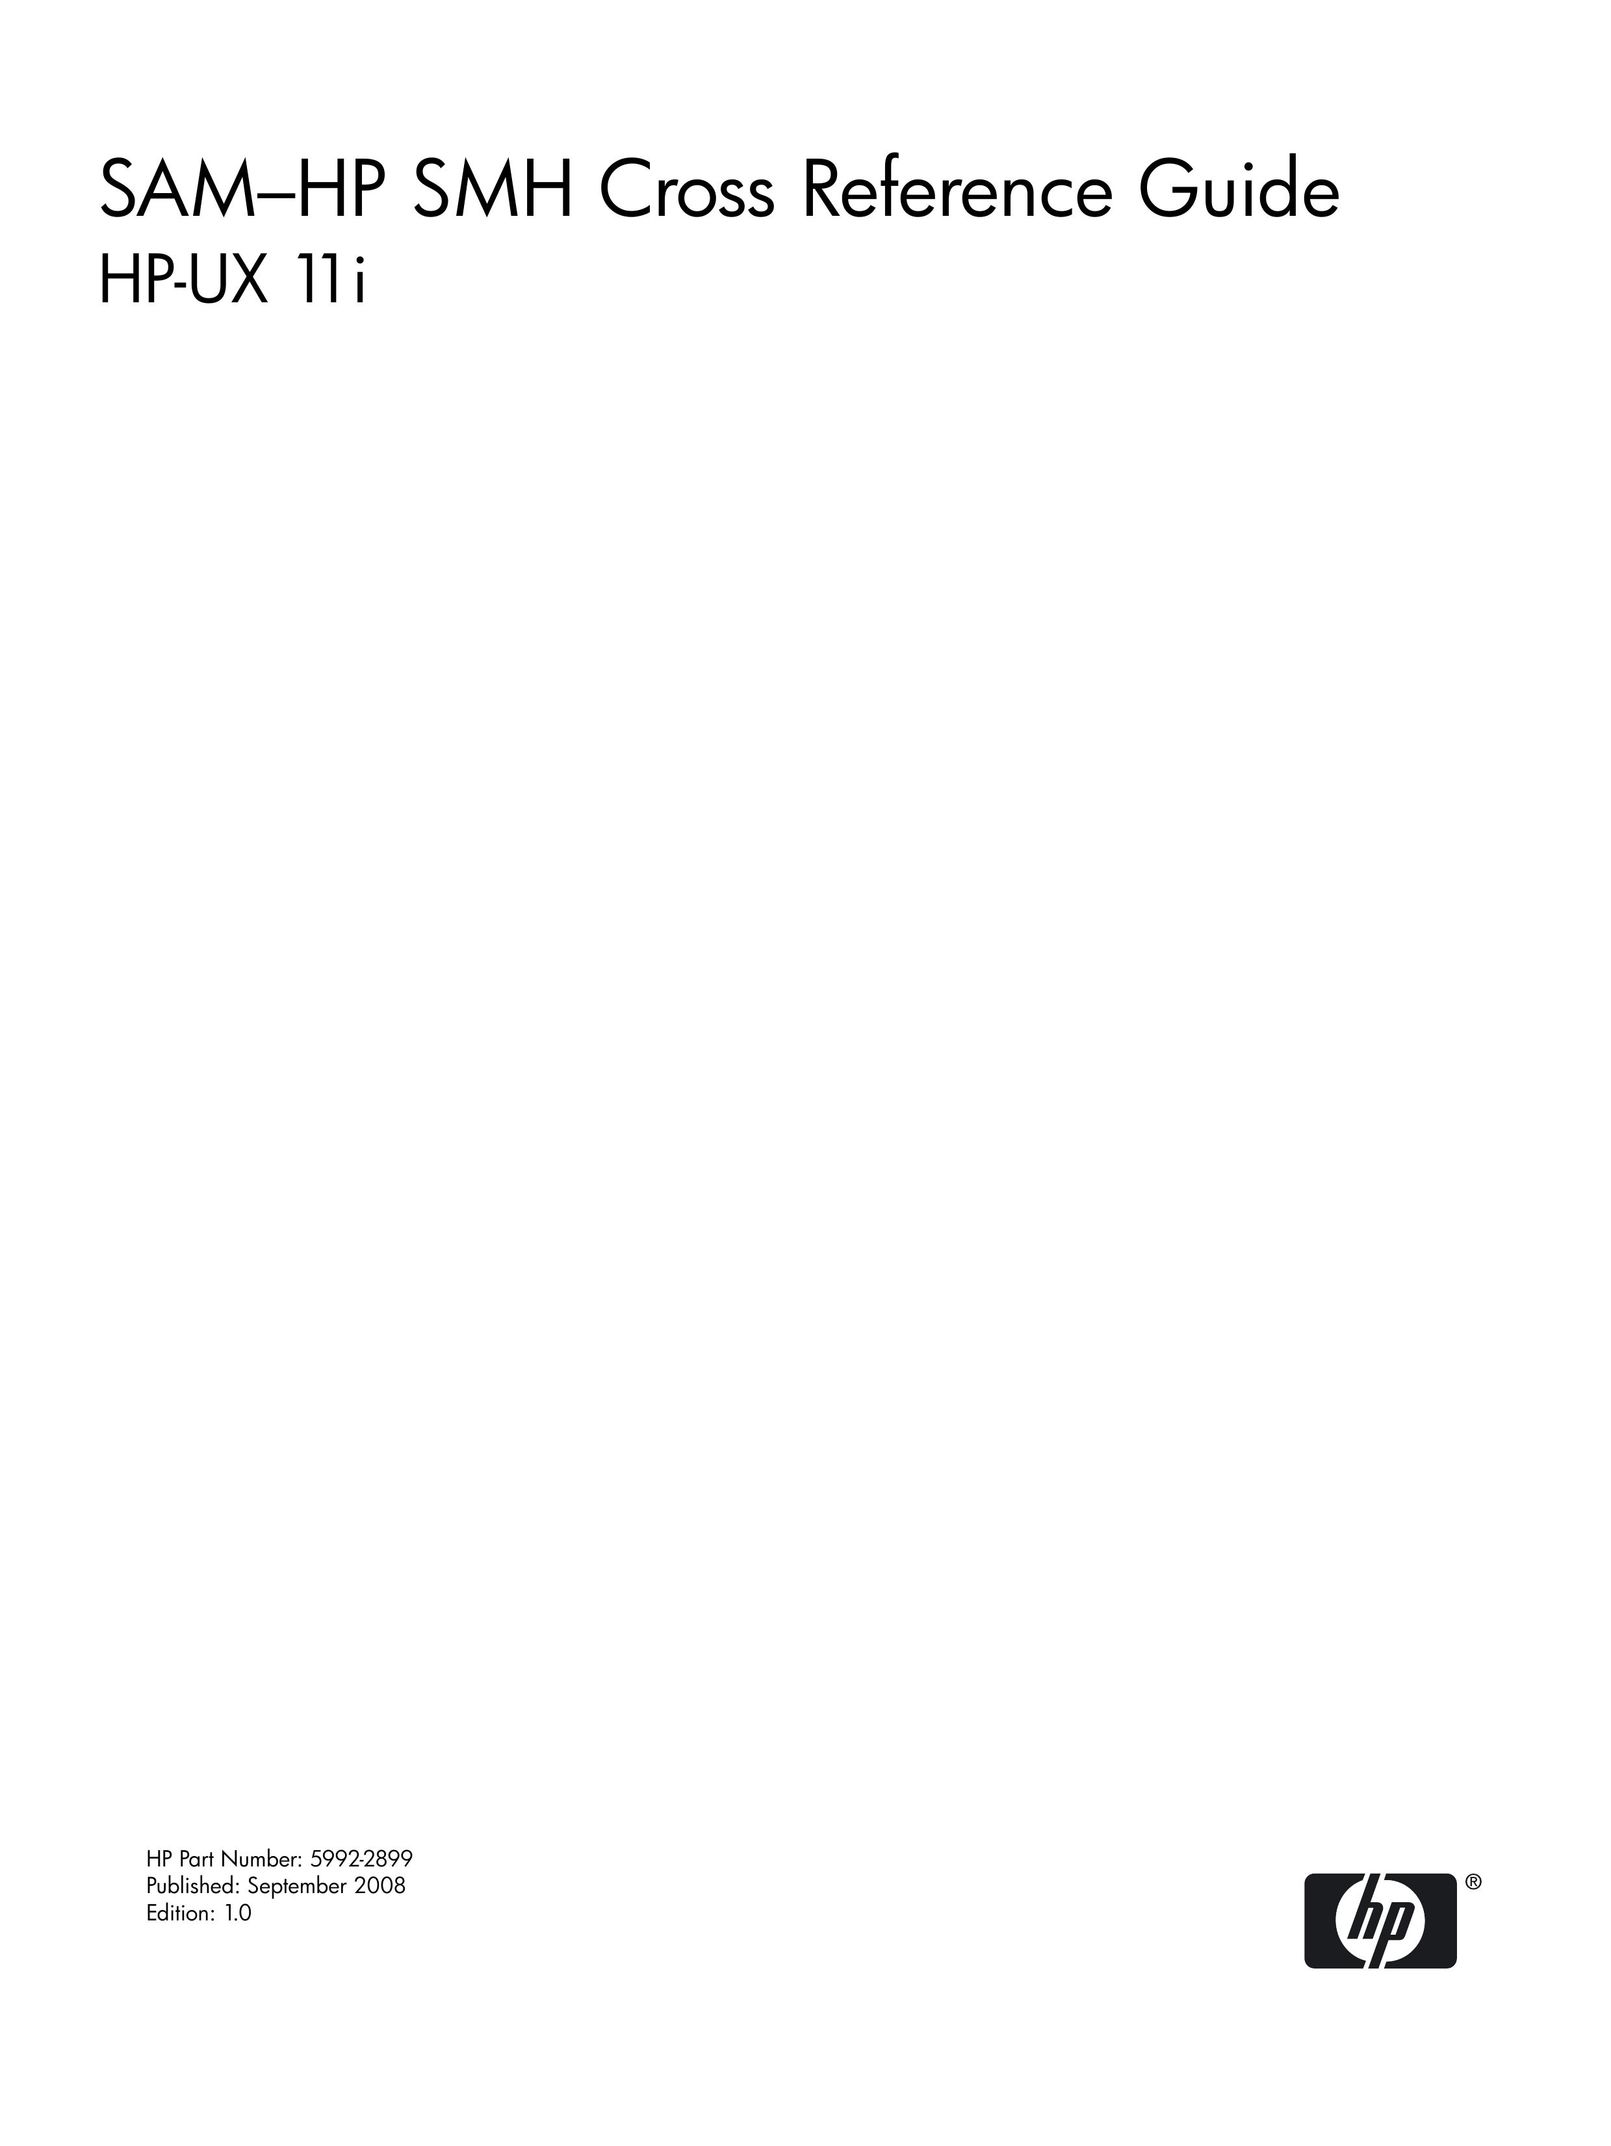 HP (Hewlett-Packard) HP-UX 11i Computer Hardware User Manual